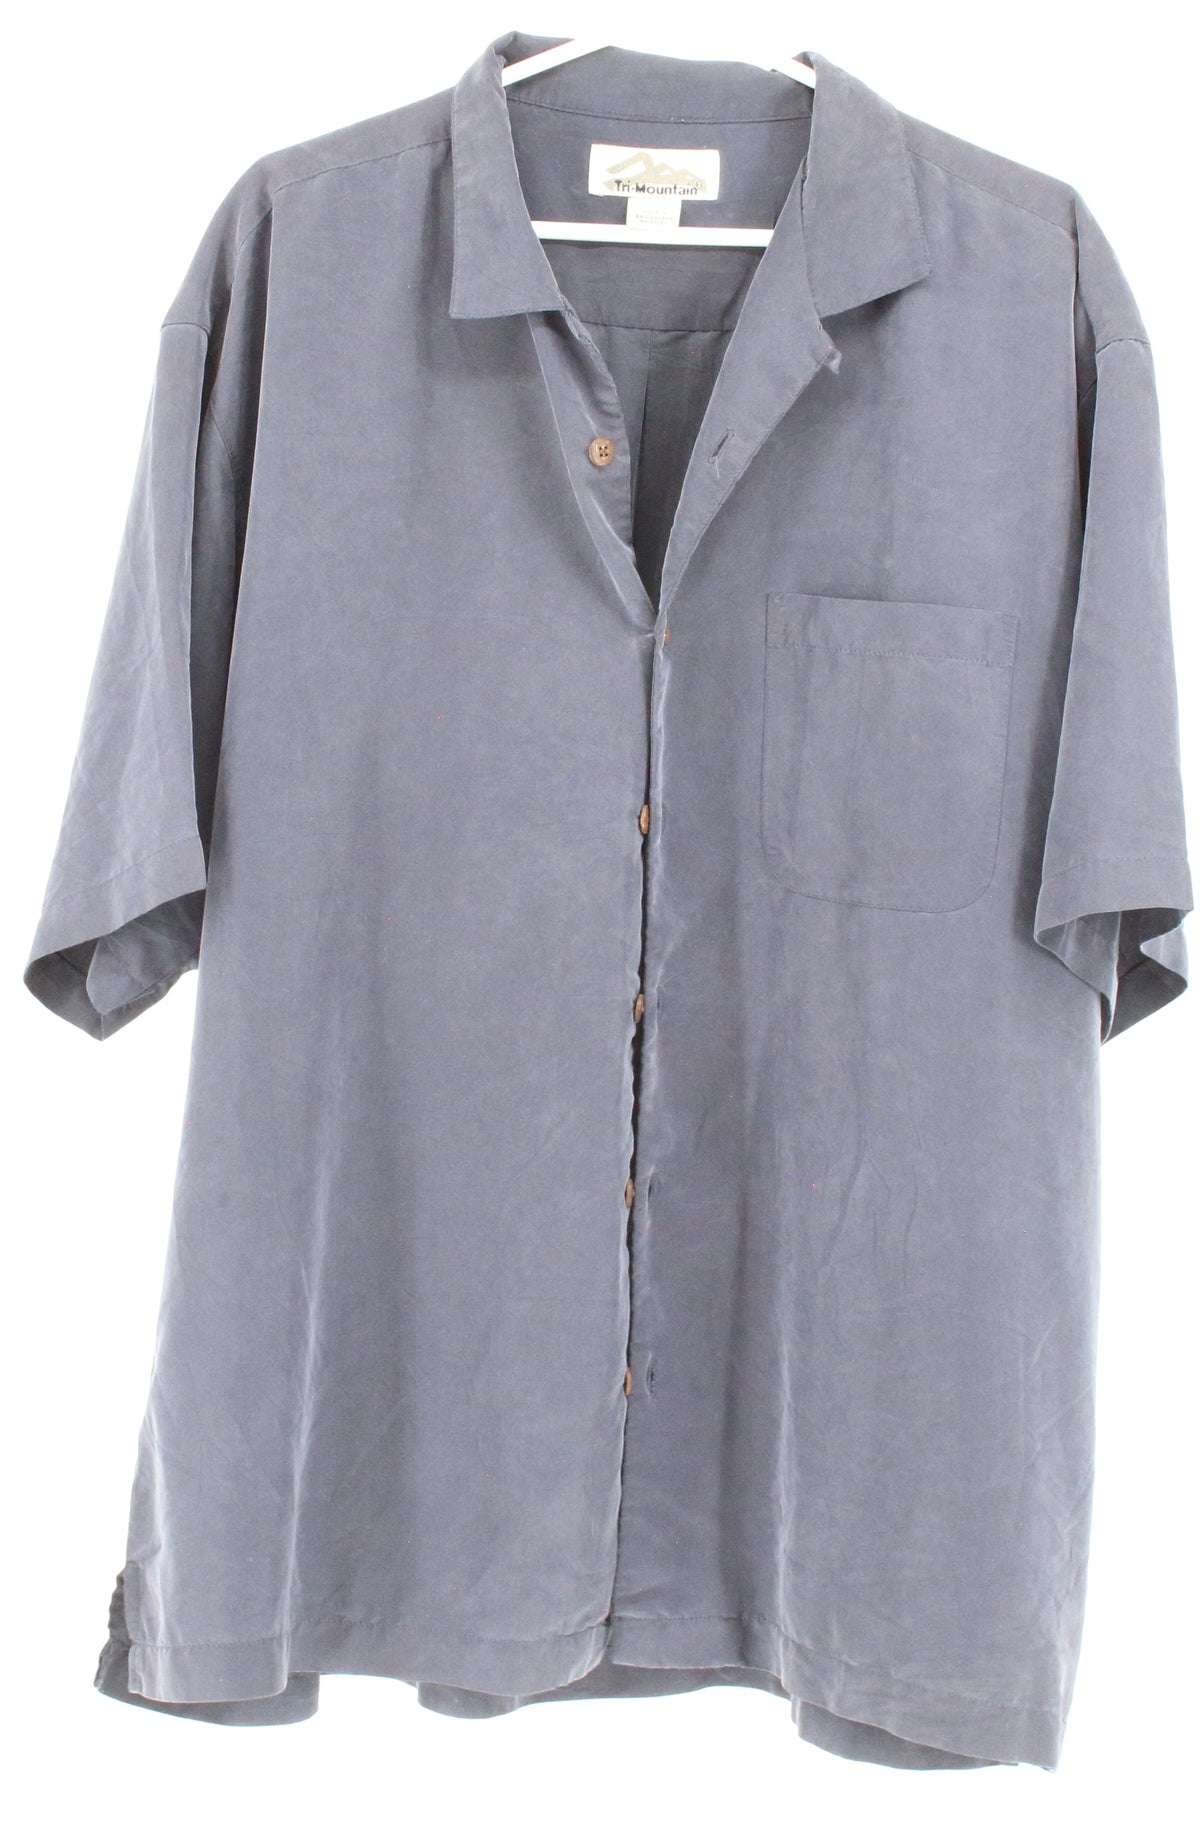 Tri-Mountain Navy Blue Button-Up Short Sleeve Shirt